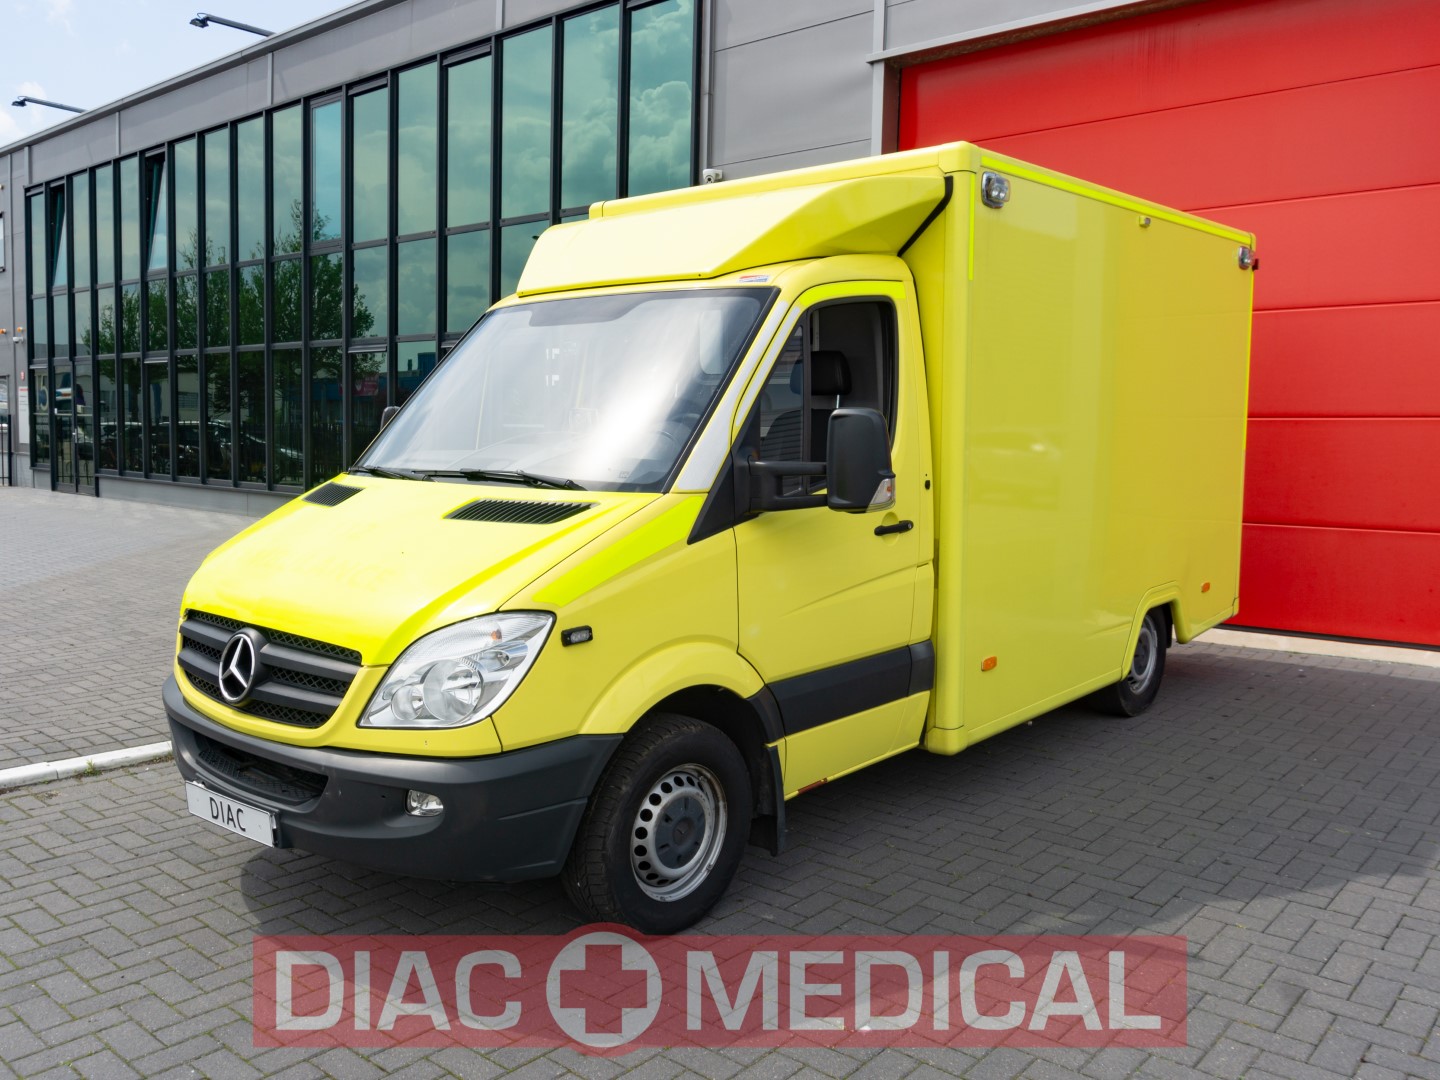 Mercedes-Benz 316 CDI Diesel Ambulance Container – 2011 (22145)